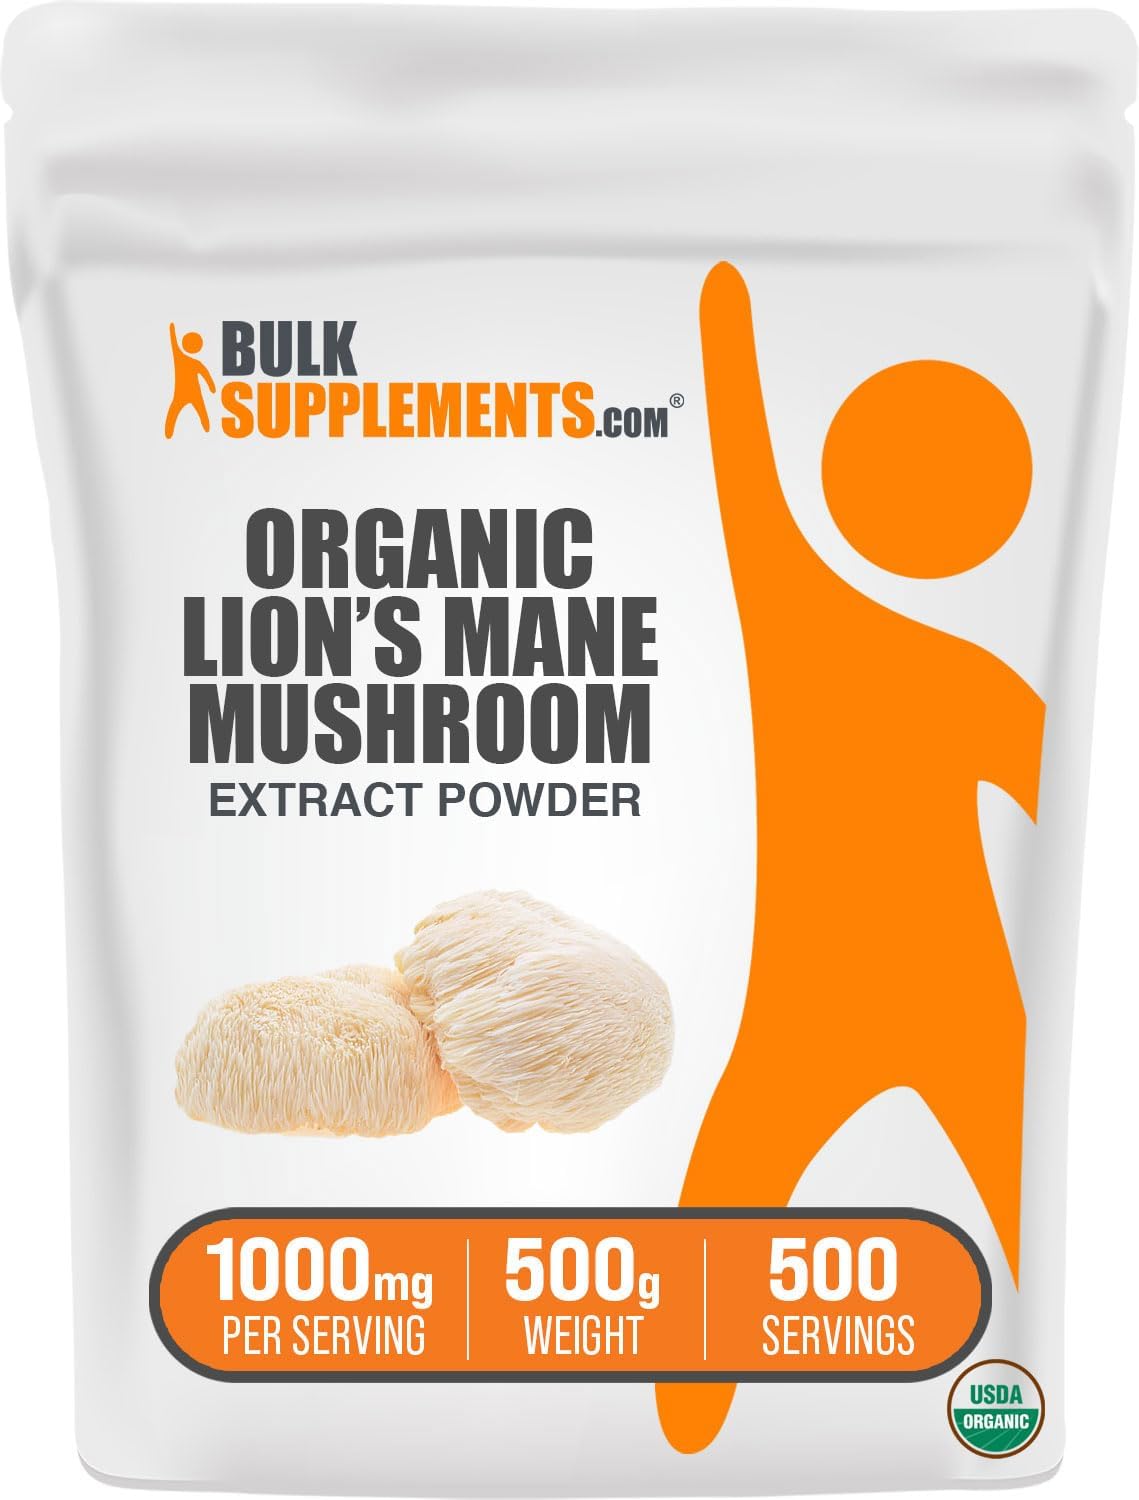 BULKSUPPLEMENTS.COM Organic Lion's Mane Mushroom Extract - Lions Mane Supplement Powder, Lion's Mane Extract, Lions Mane Powder - for Immune Health, Gluten Free - 1000mg  - $18.86